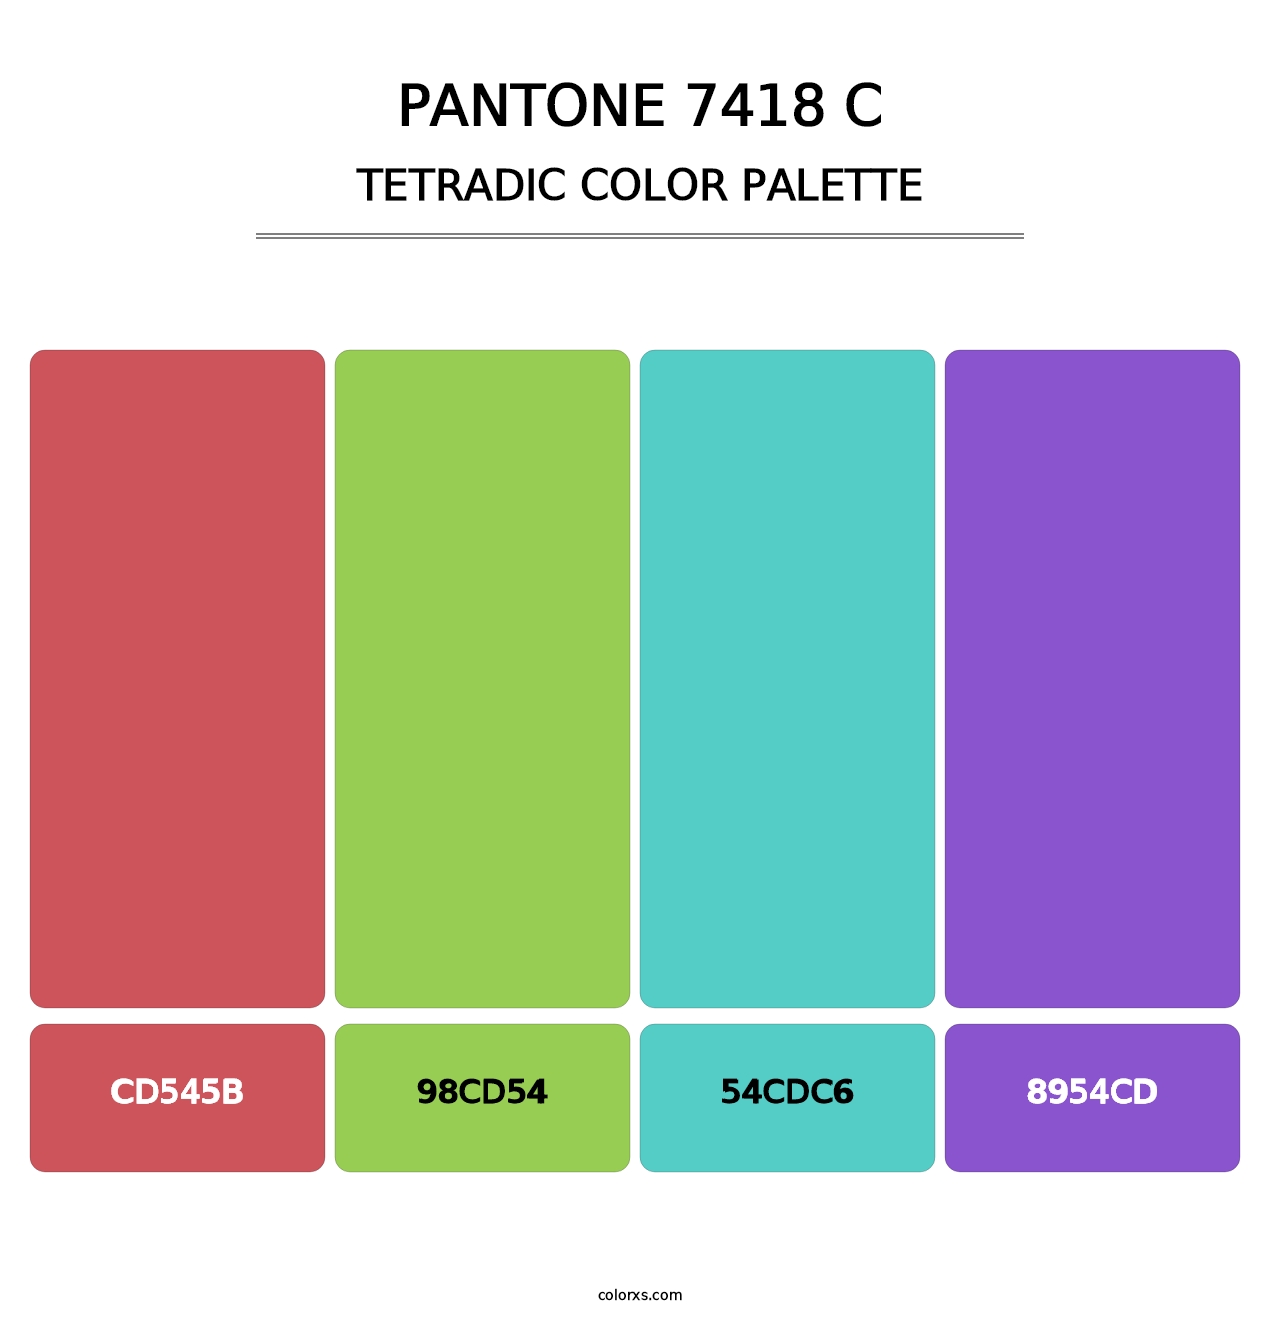 PANTONE 7418 C - Tetradic Color Palette